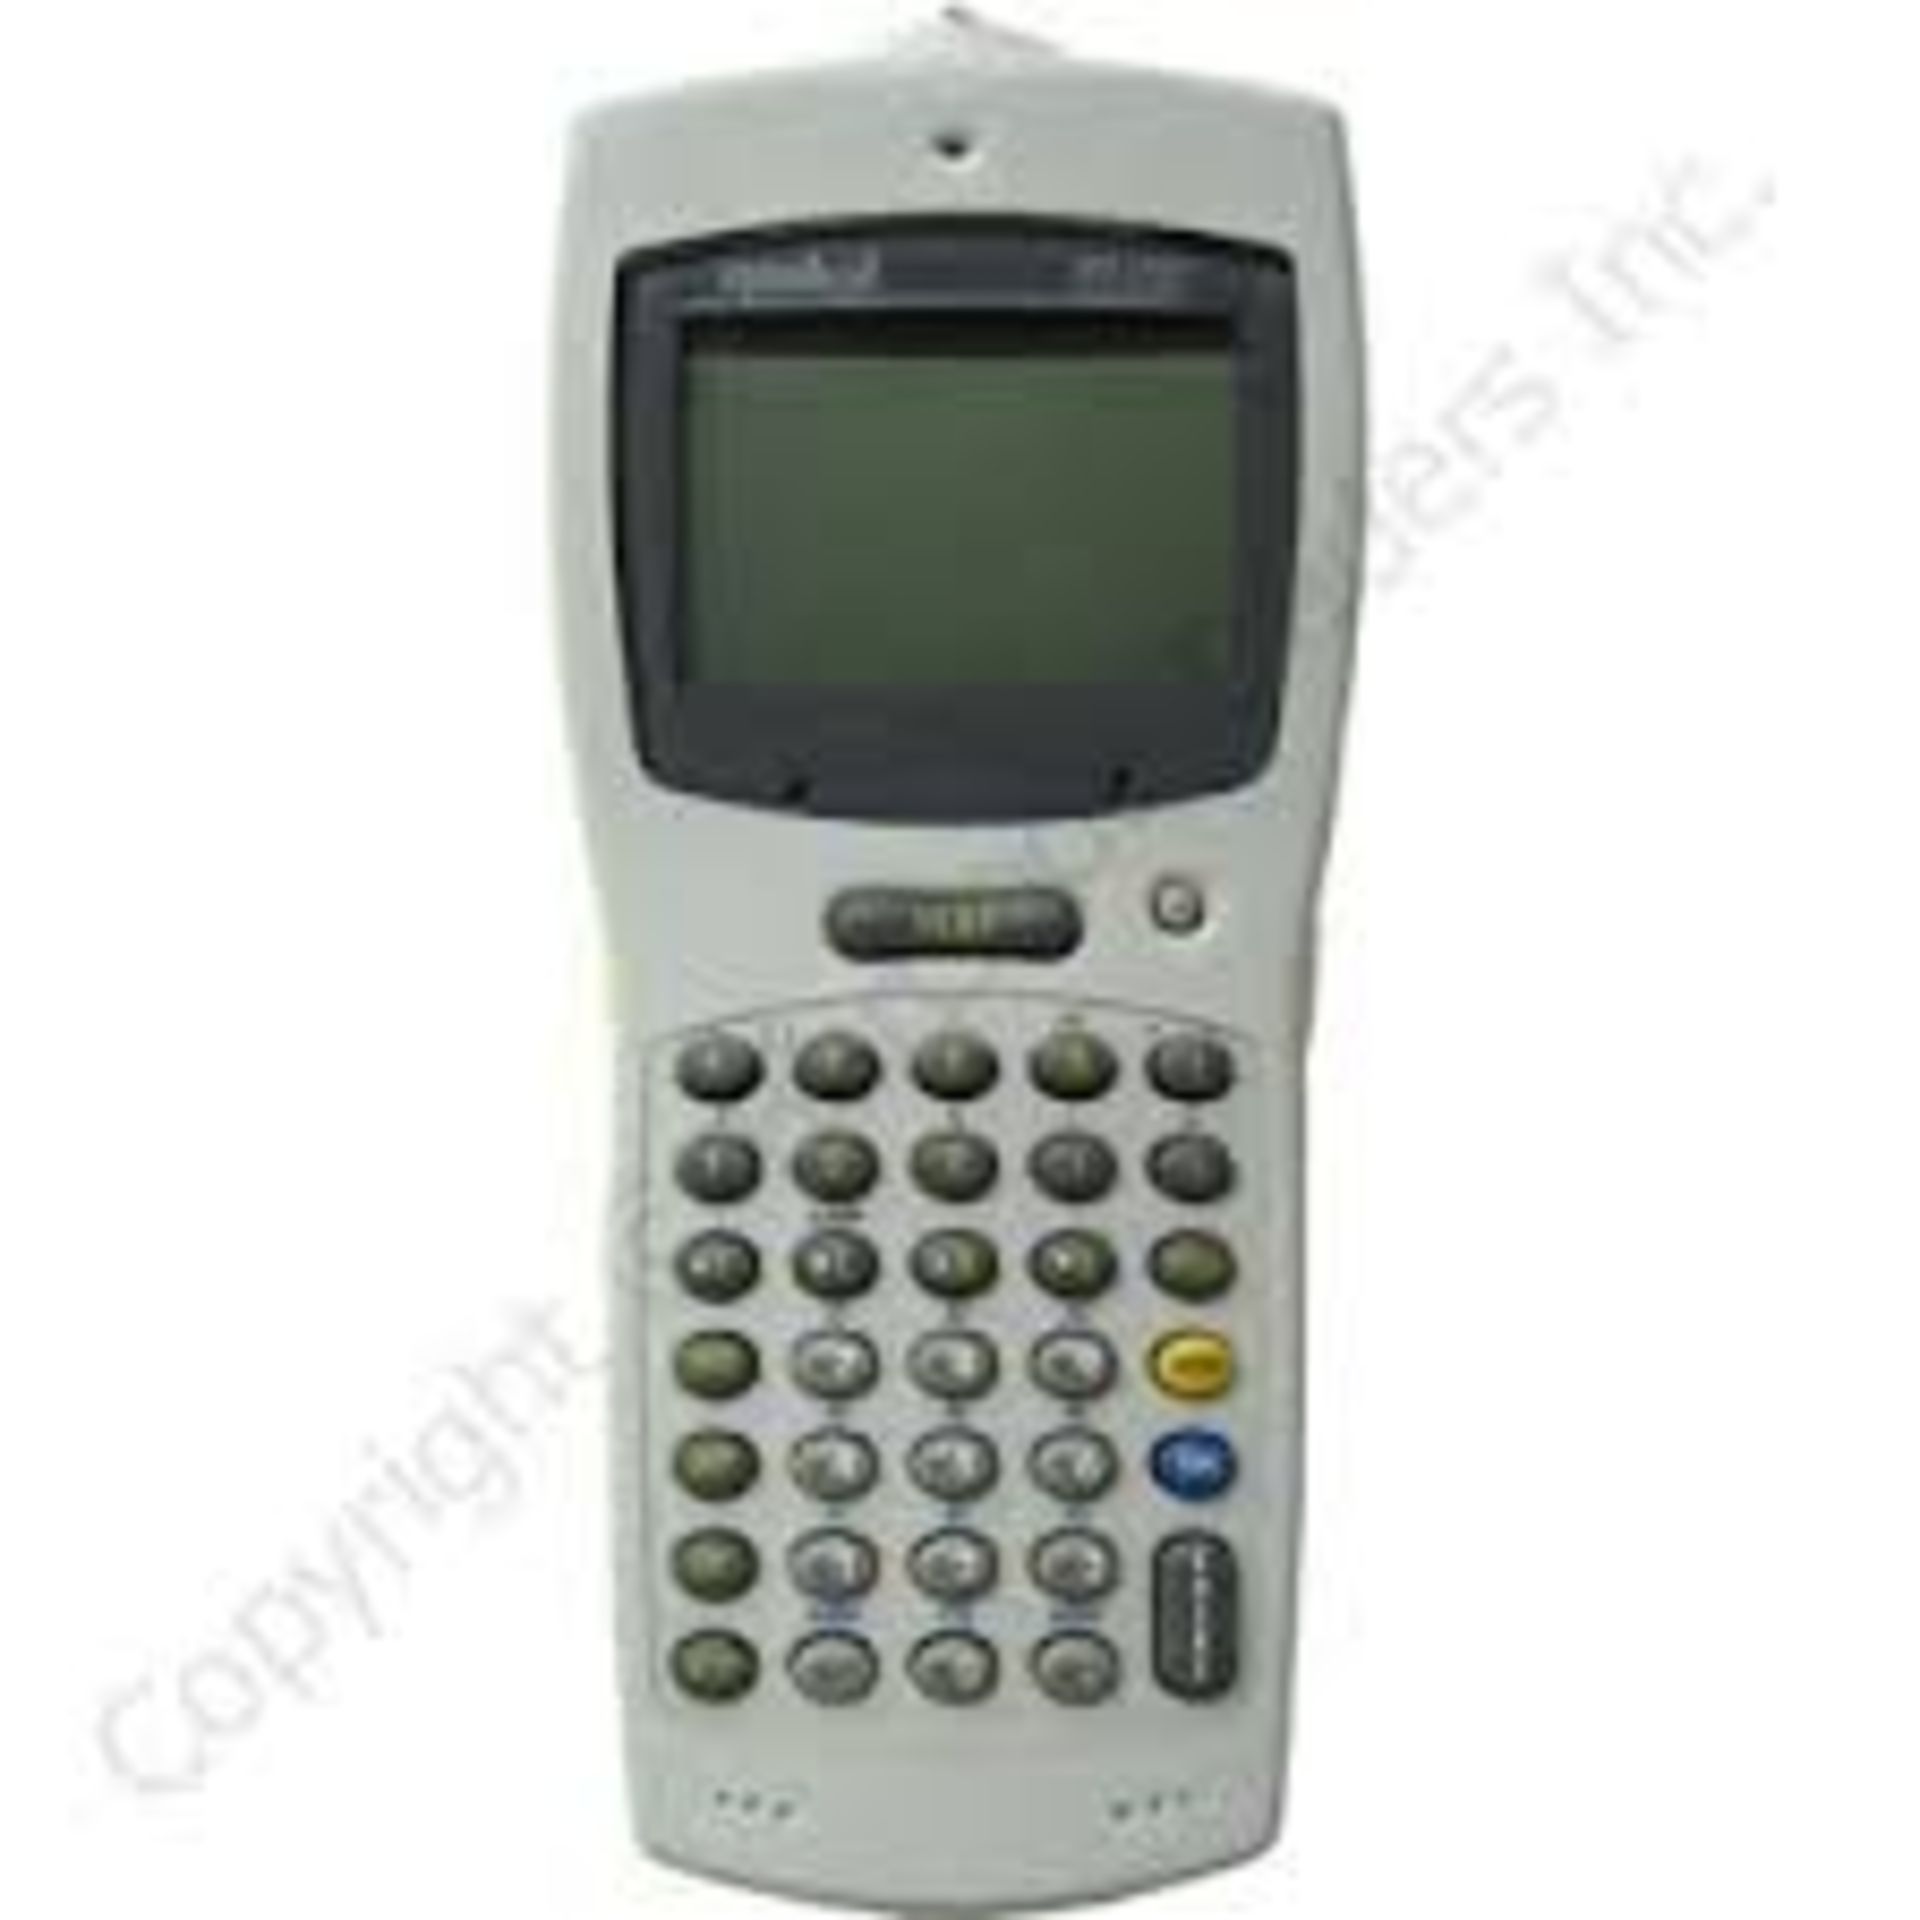 5 x Symbol PDT 6100 35 Key Barcode Scanner - Used - Location: Altrincham WA14 -